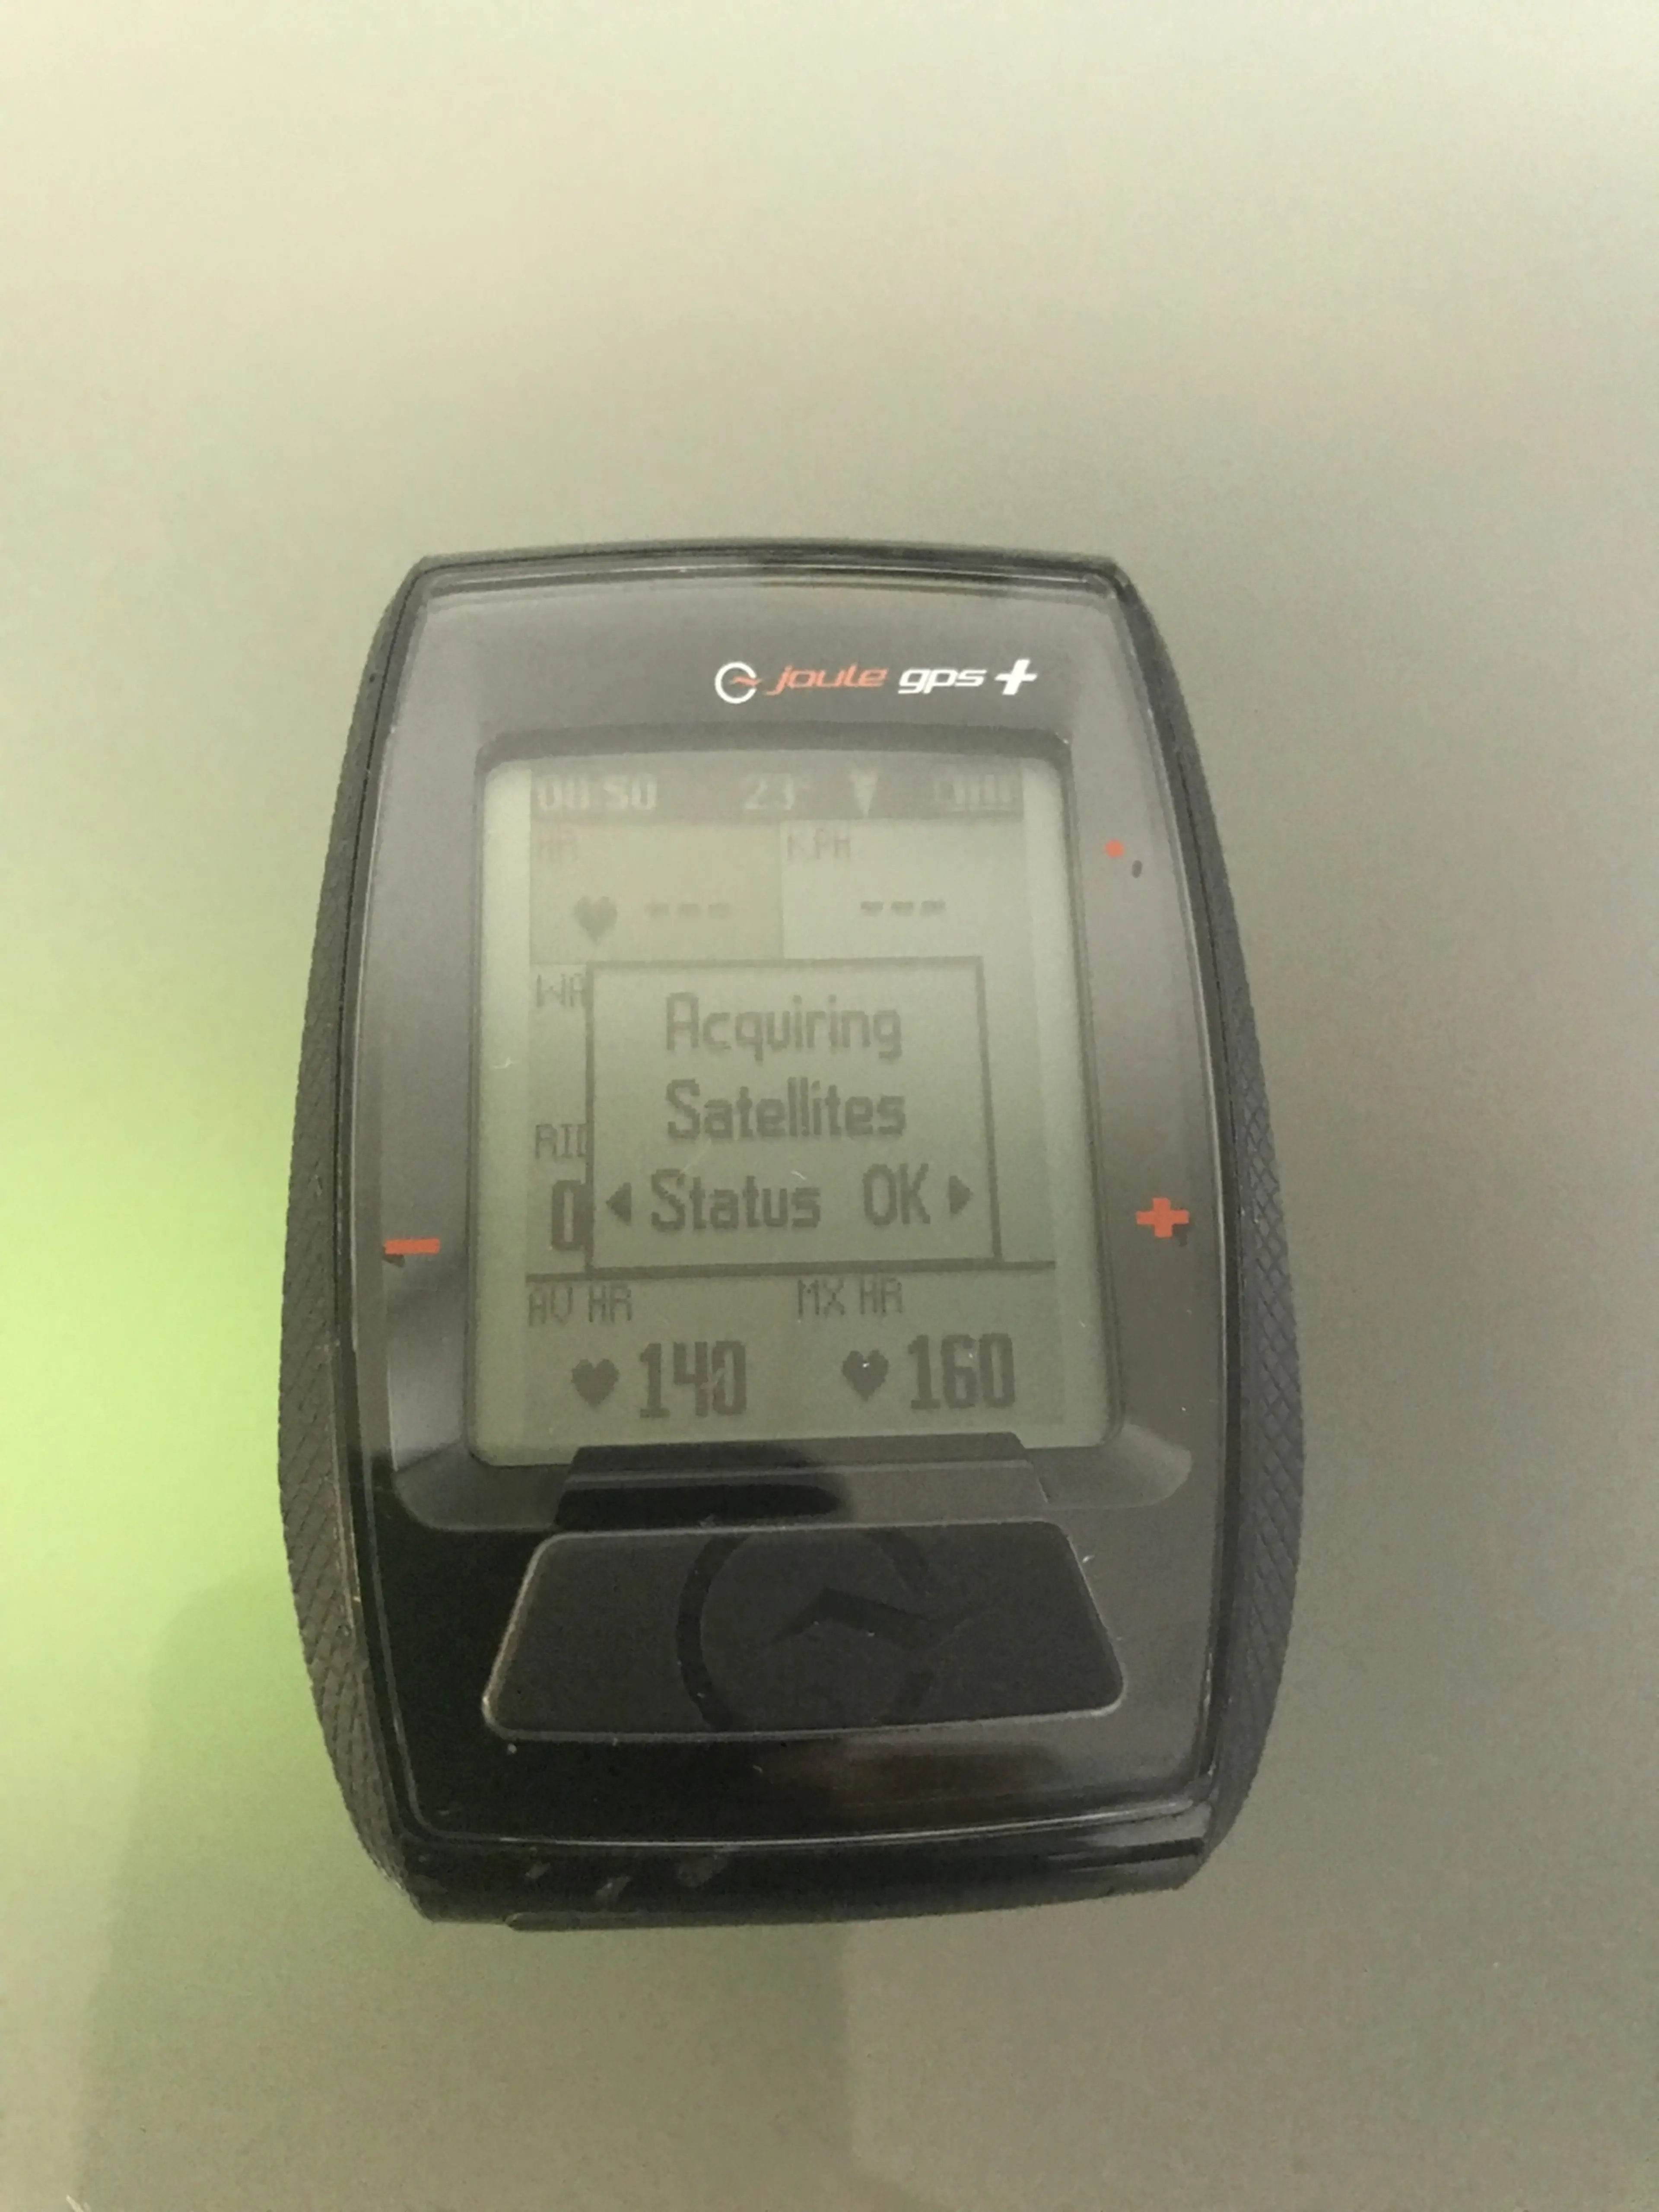 Image Calculator ciclism (ciclocomputer) PowerTap Joule GPS Plus